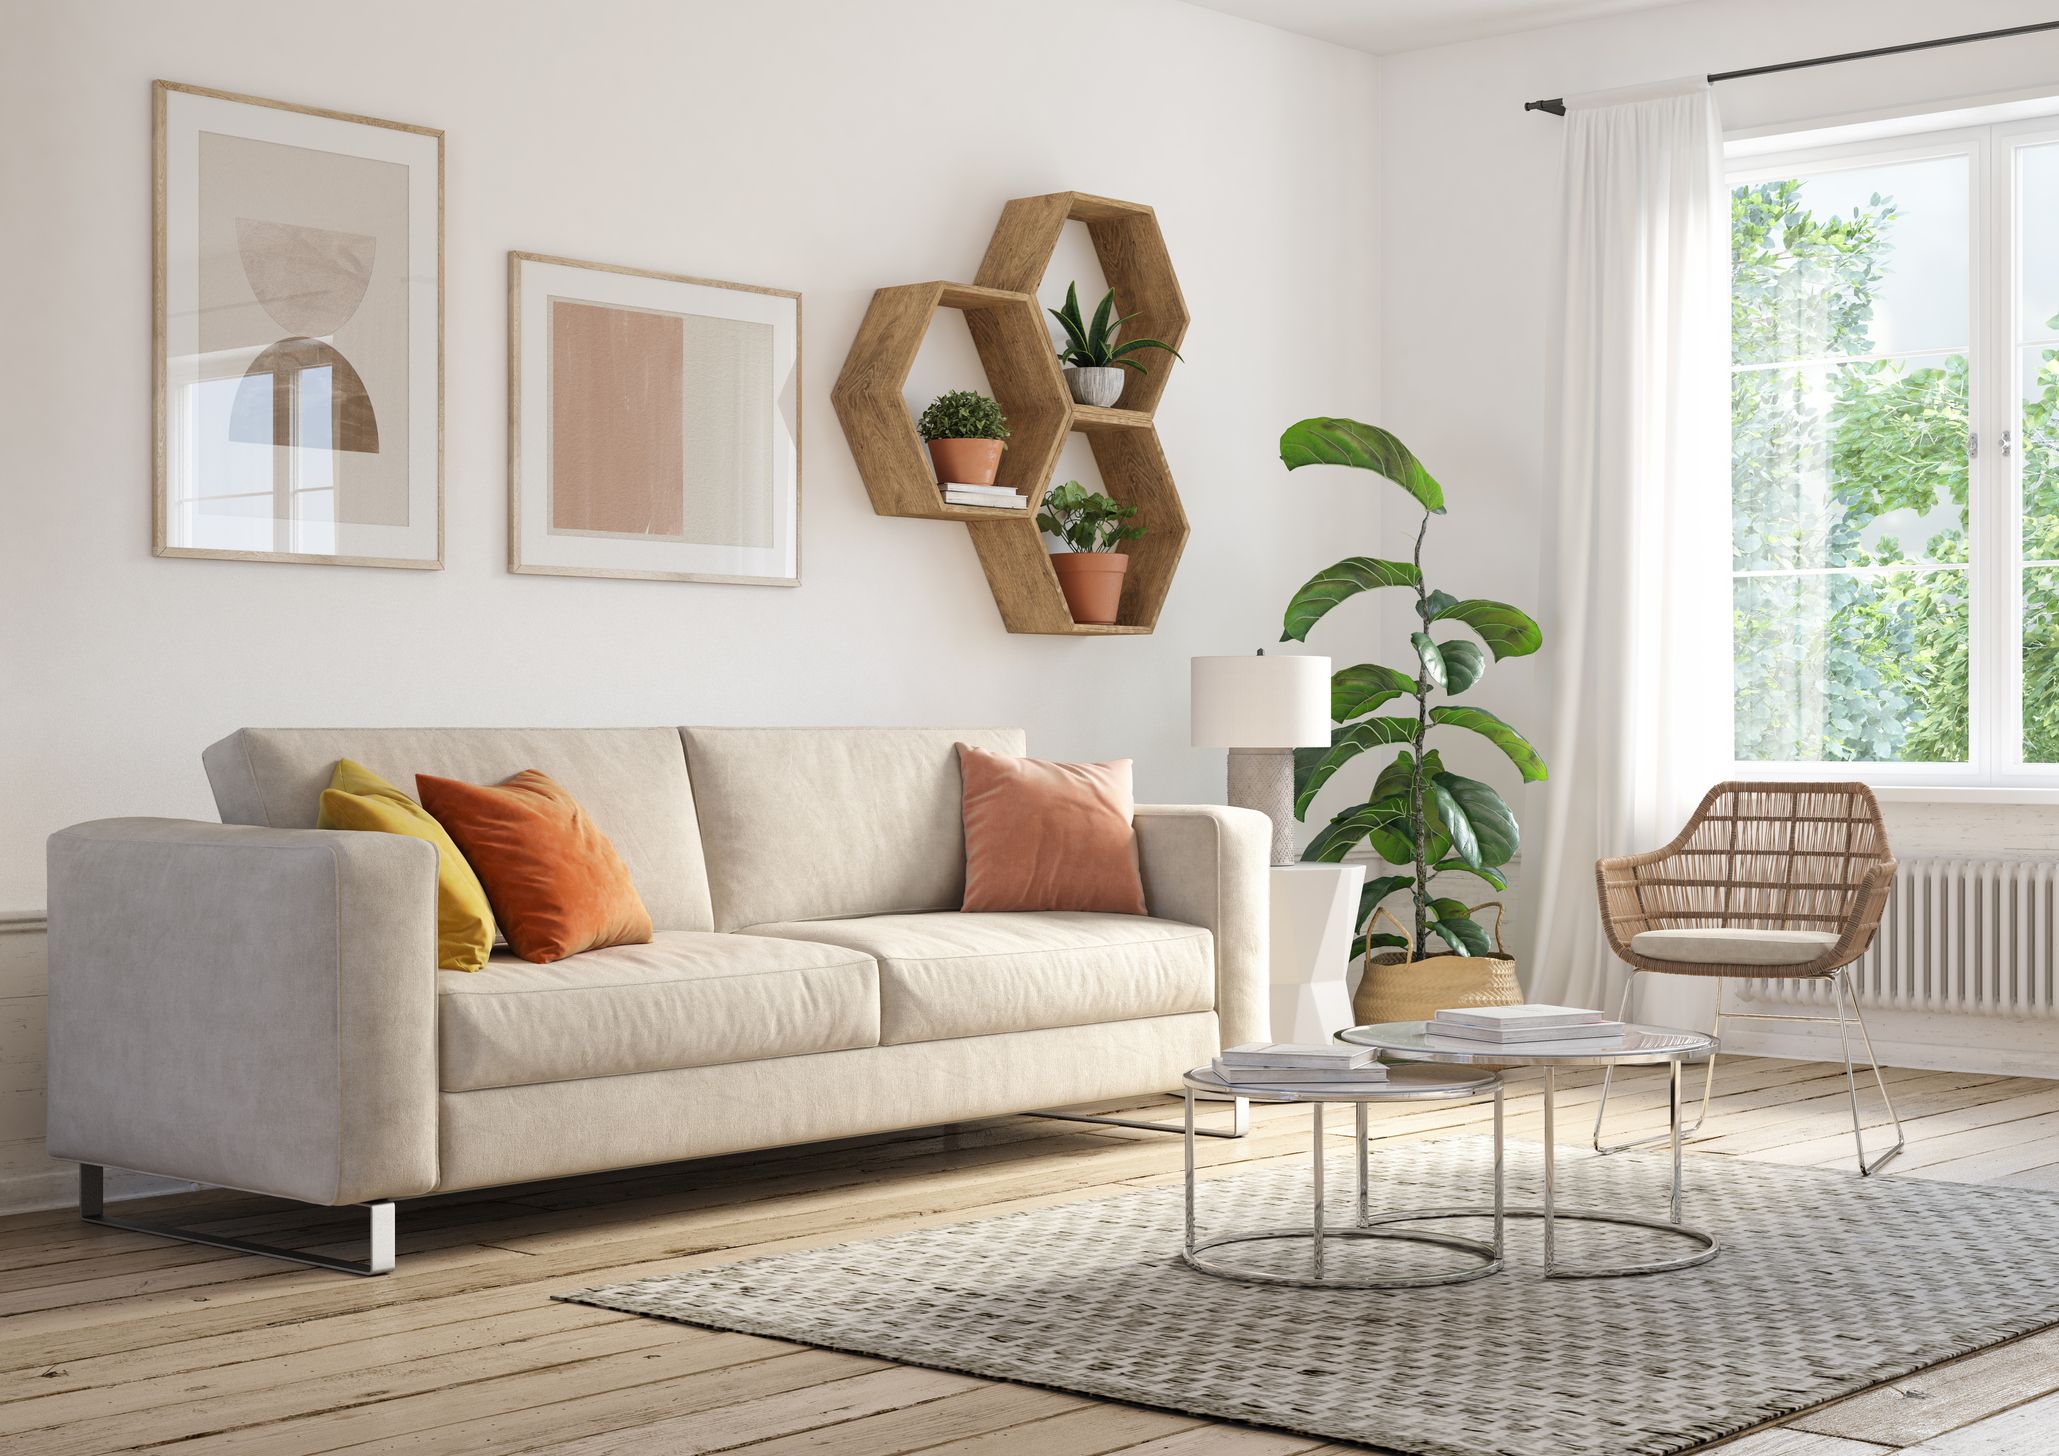 Living room inspiration ideas from an expert